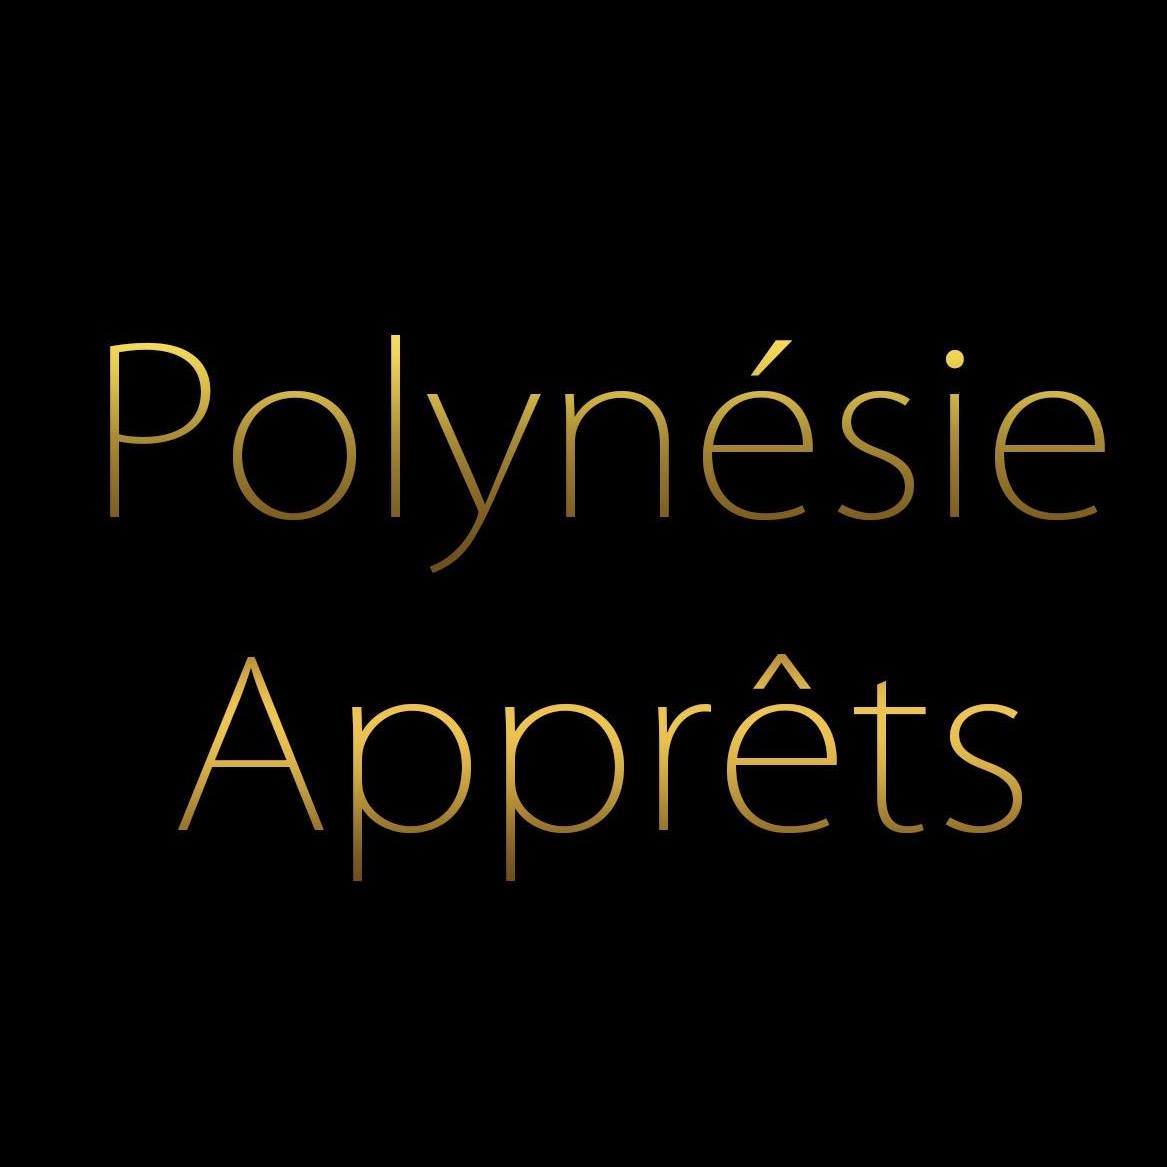 POLYNESIE APPRETS